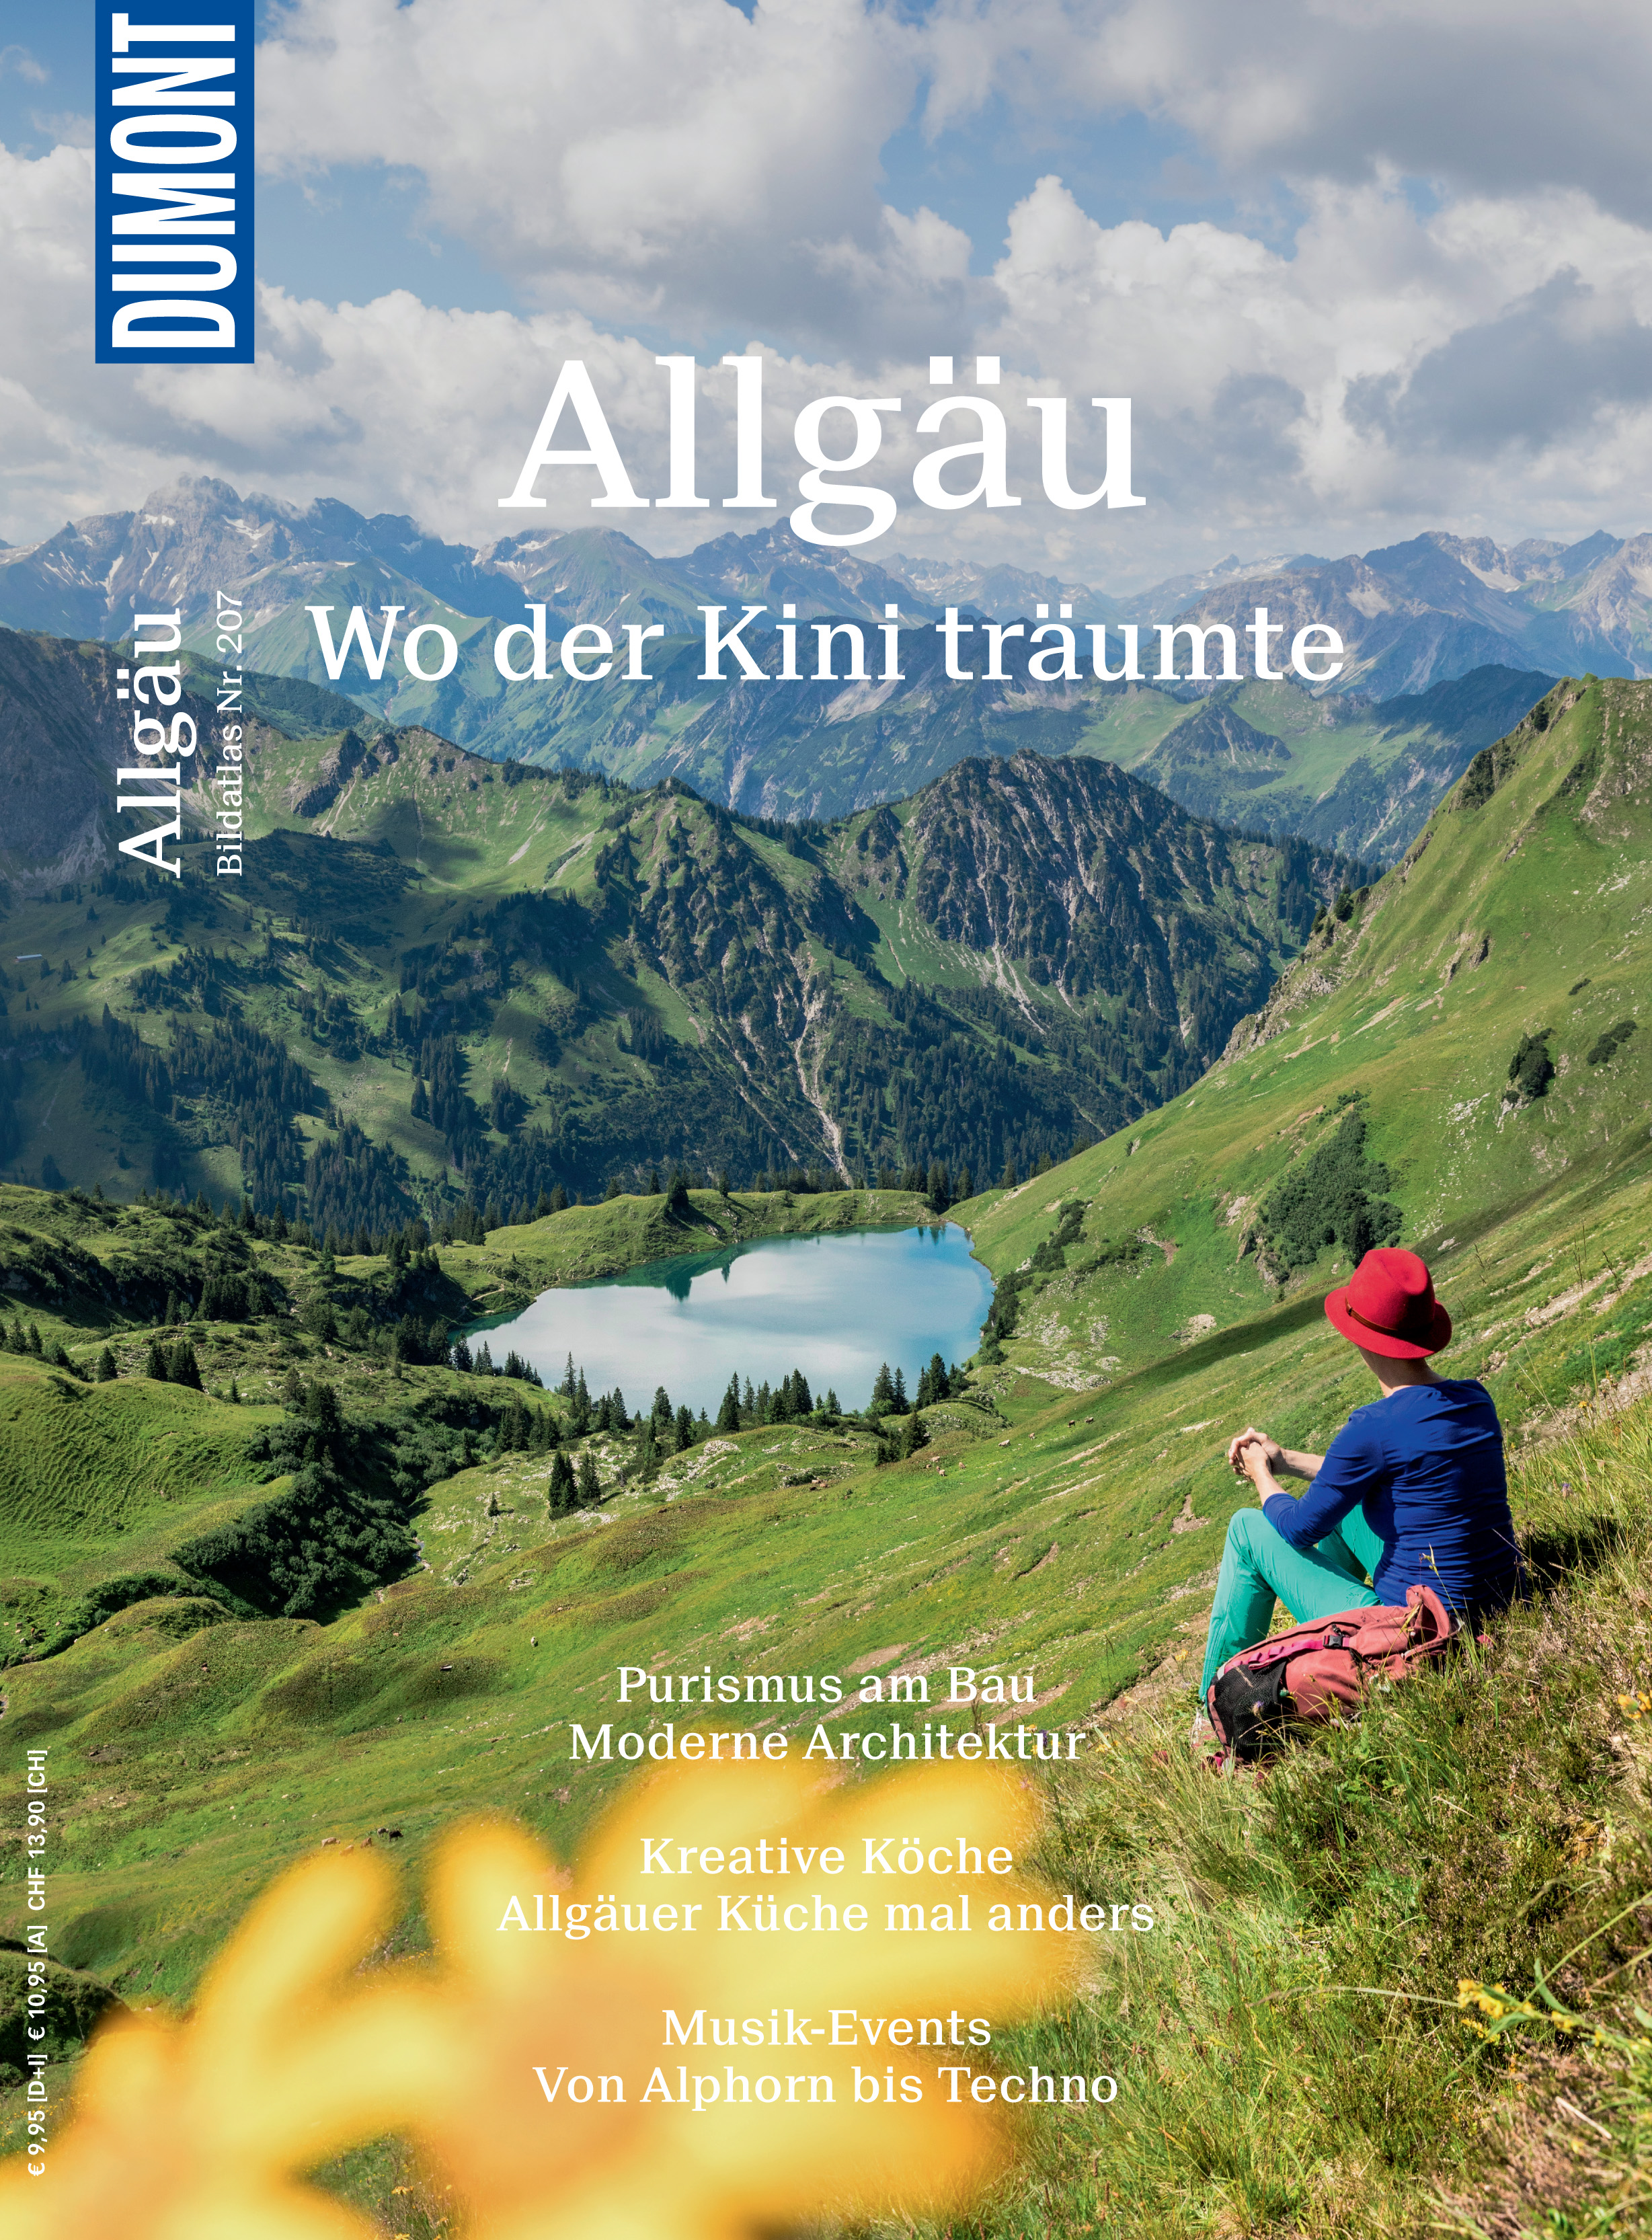 DuMont Bildatlas - Allgäu (Cover)